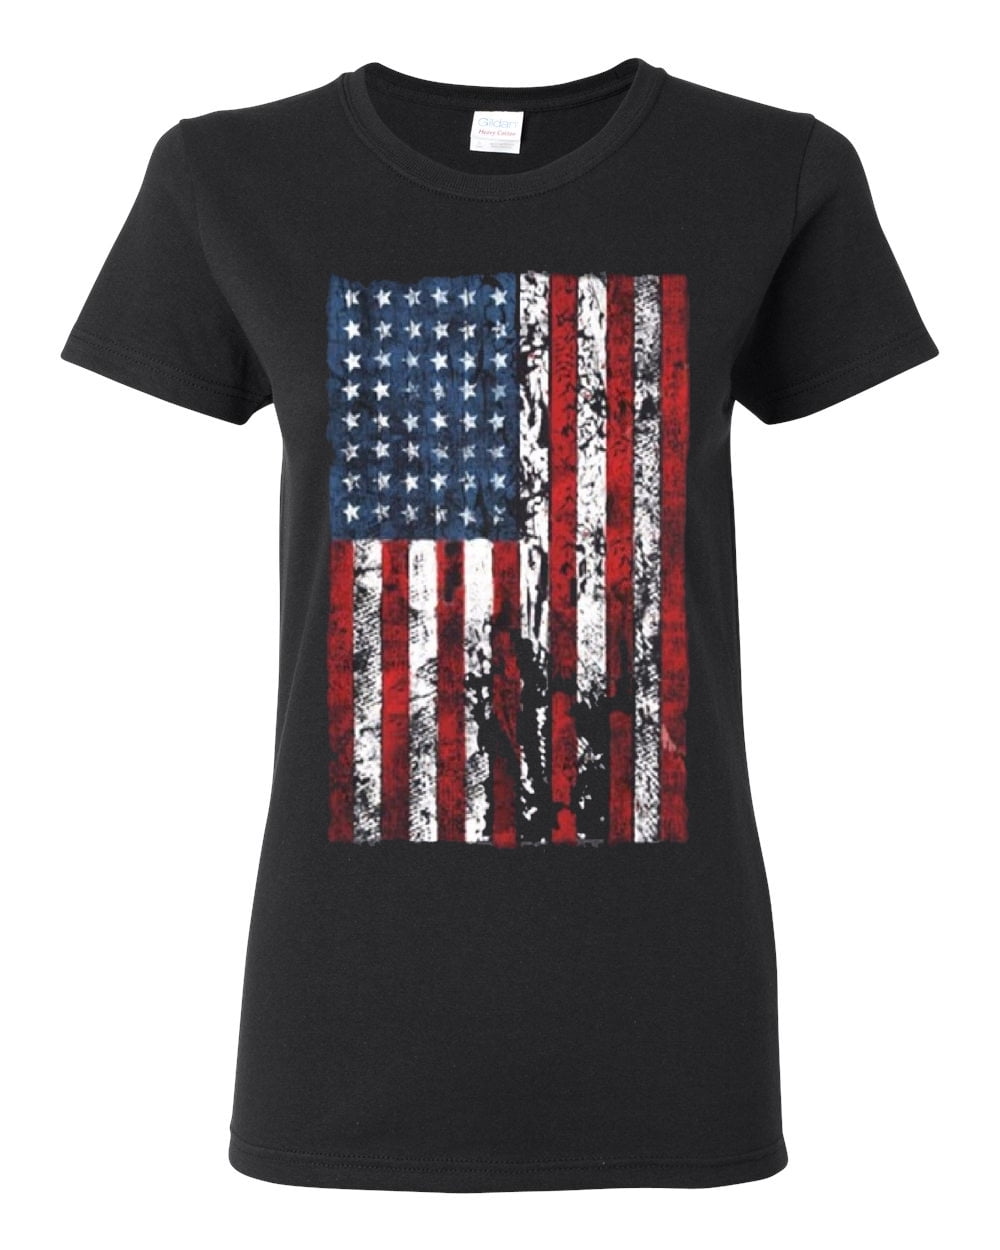 Custom Apparel R Us - Distressed American Flag Clothing Womens Top ...